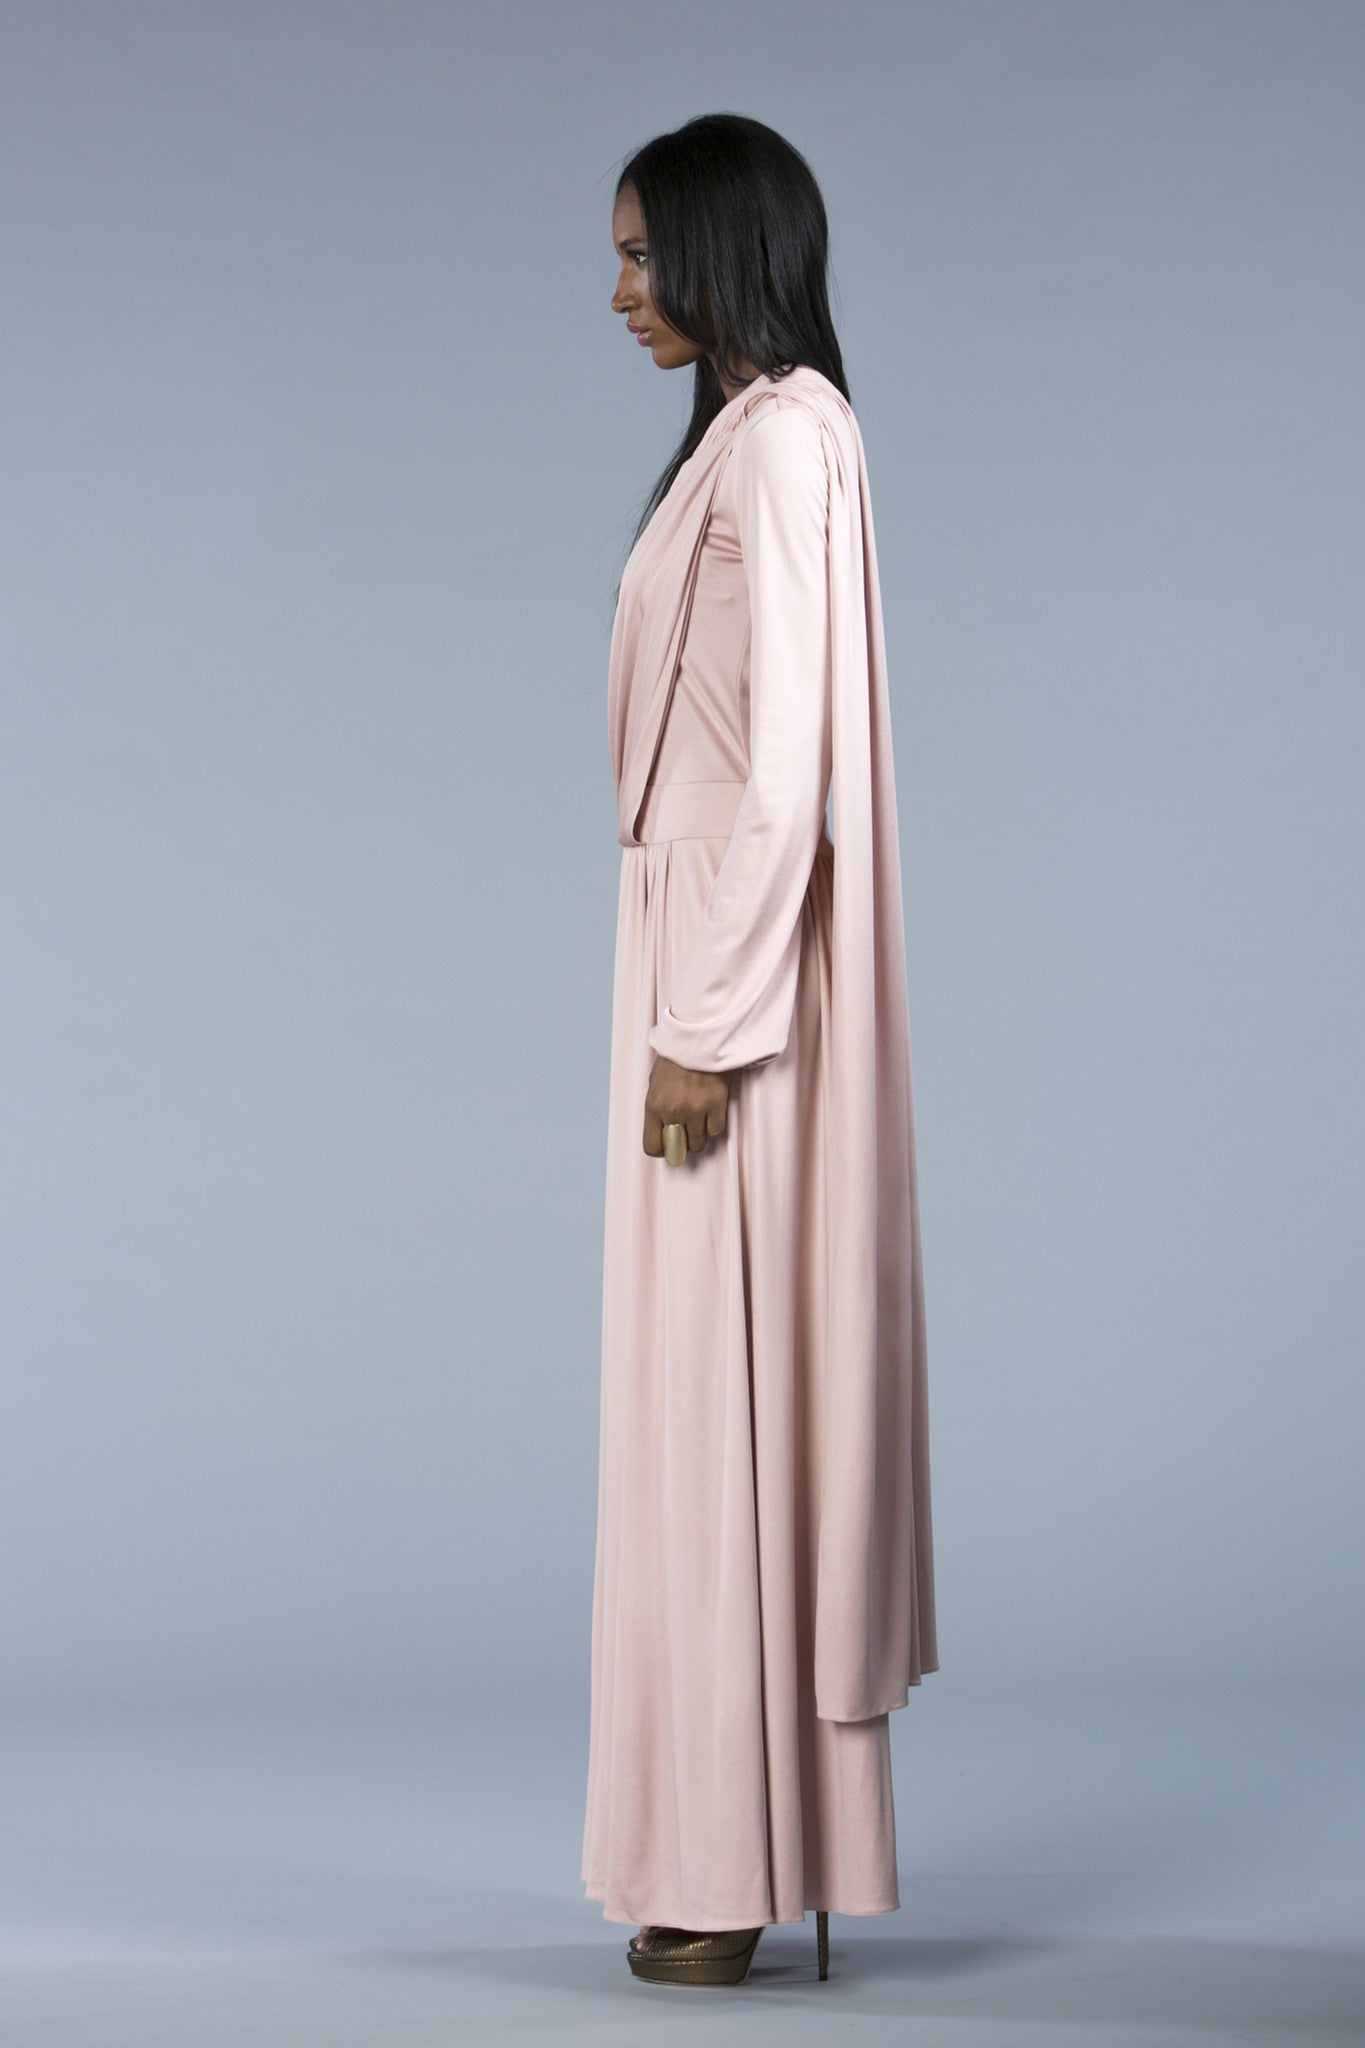 Long draped silk dress, elegant, versatile. Hijab option. Modest